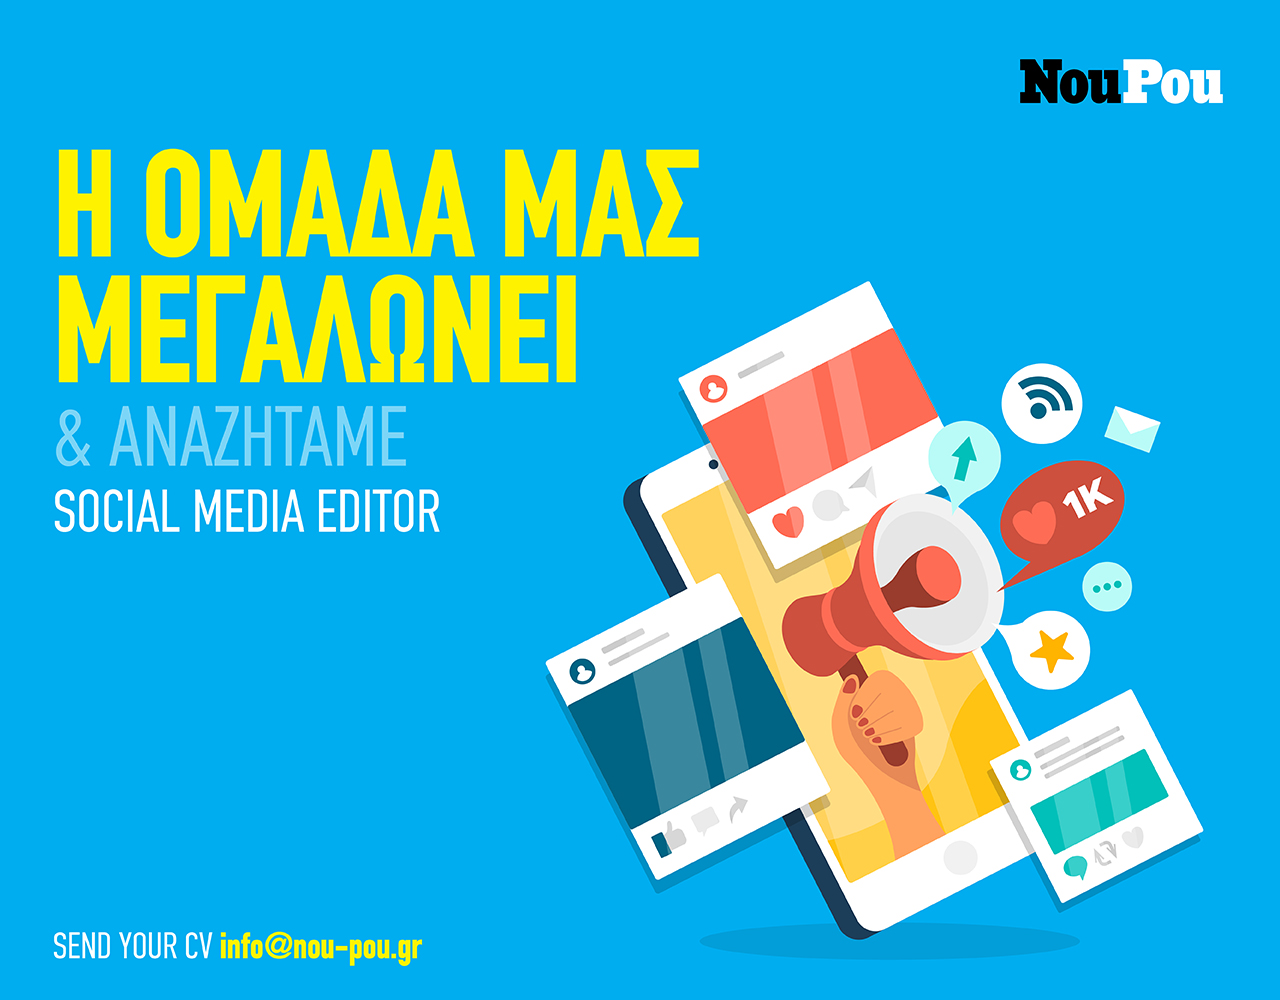 Job Alert: Το NouPou αναζητά Social Media Editor για την ομάδα του